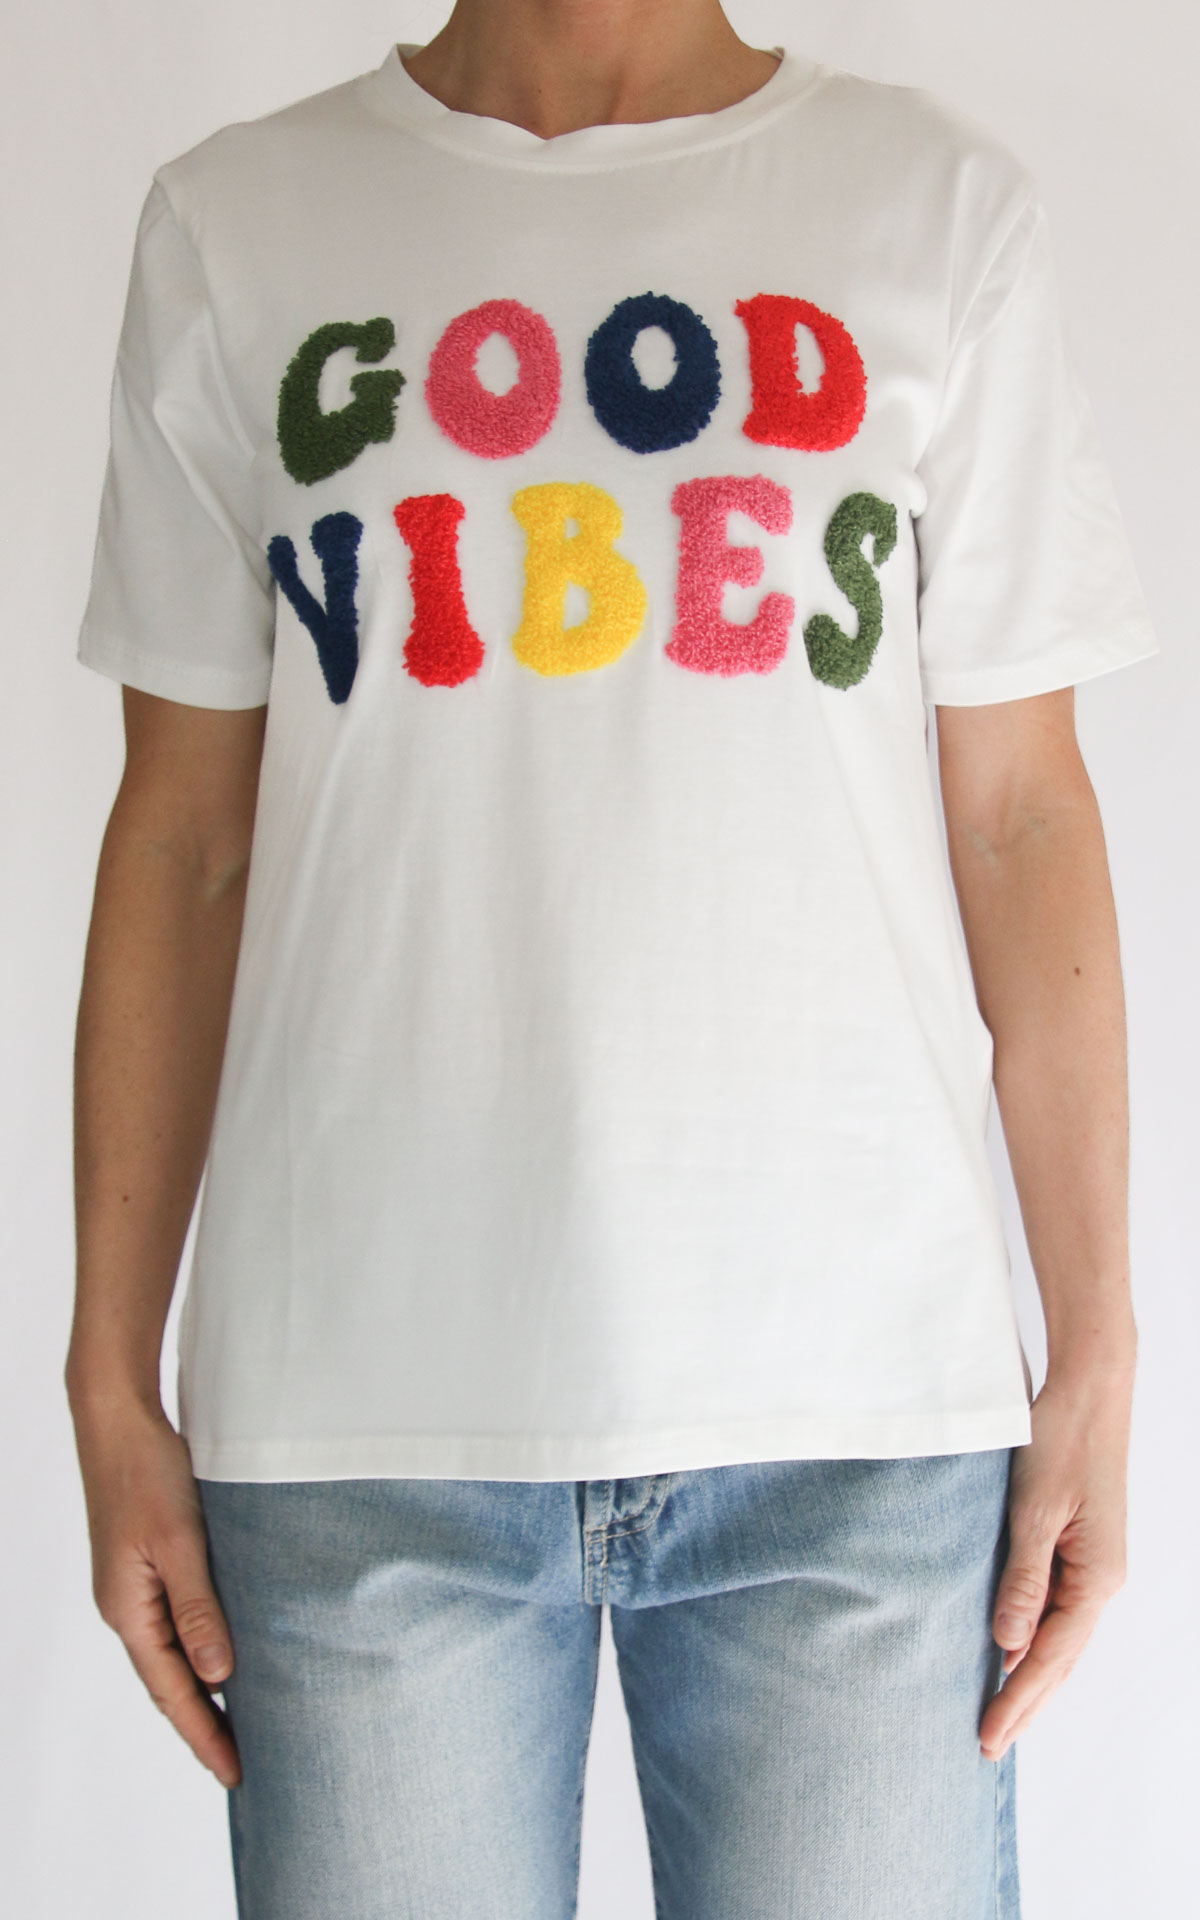 Civico 1 - T-shirt decoro - Good vibes